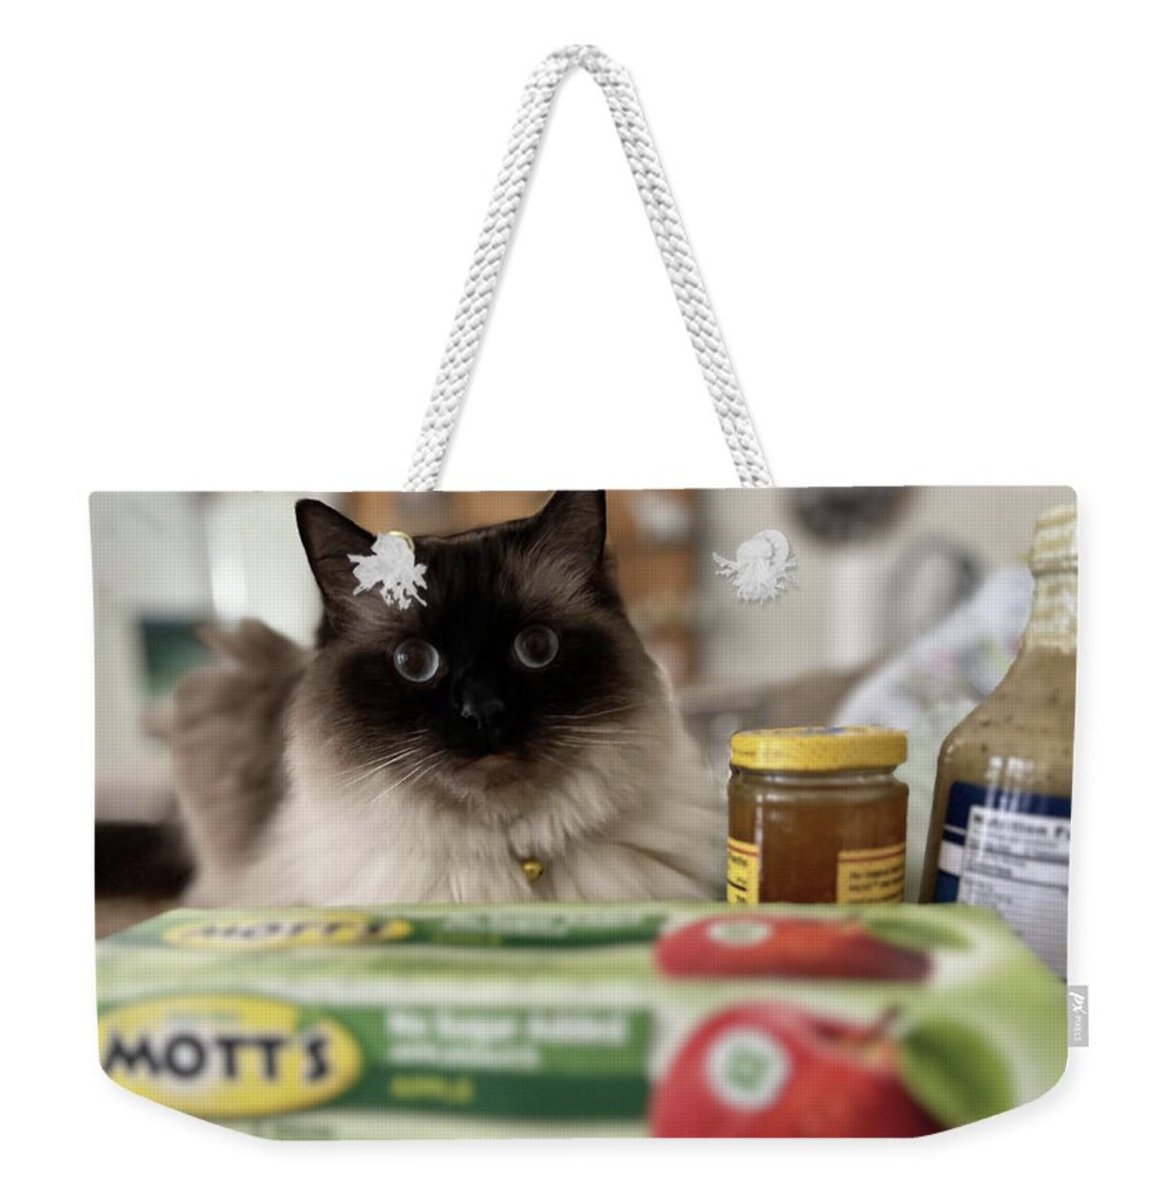 Ragdoll Cat Shopping Day - Weekended Tote Bag
karen-rosenblatt.pixels.com/featured/ragdo… 
#ragdollcat #catlovergift #catphotaography #BuyIntoArt #ShopEarly #GiftThemArt #AYearForArt #BuyArtNotCandy #ShopEarly #HolidayShopping